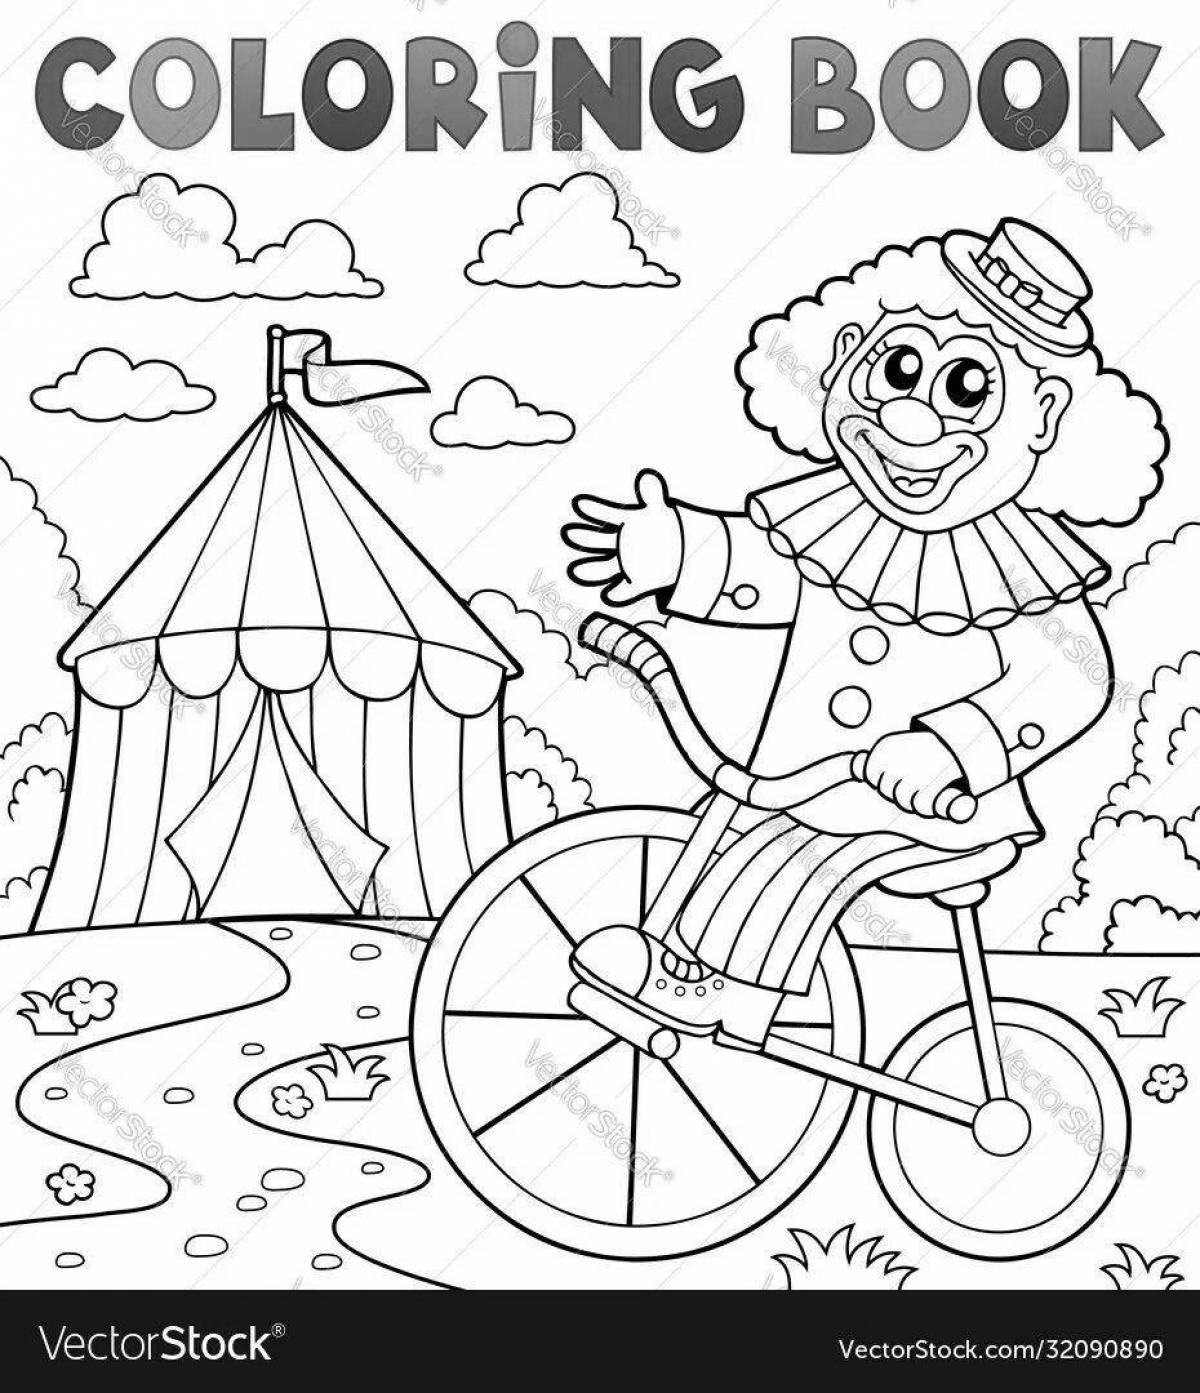 Bright circus coloring book